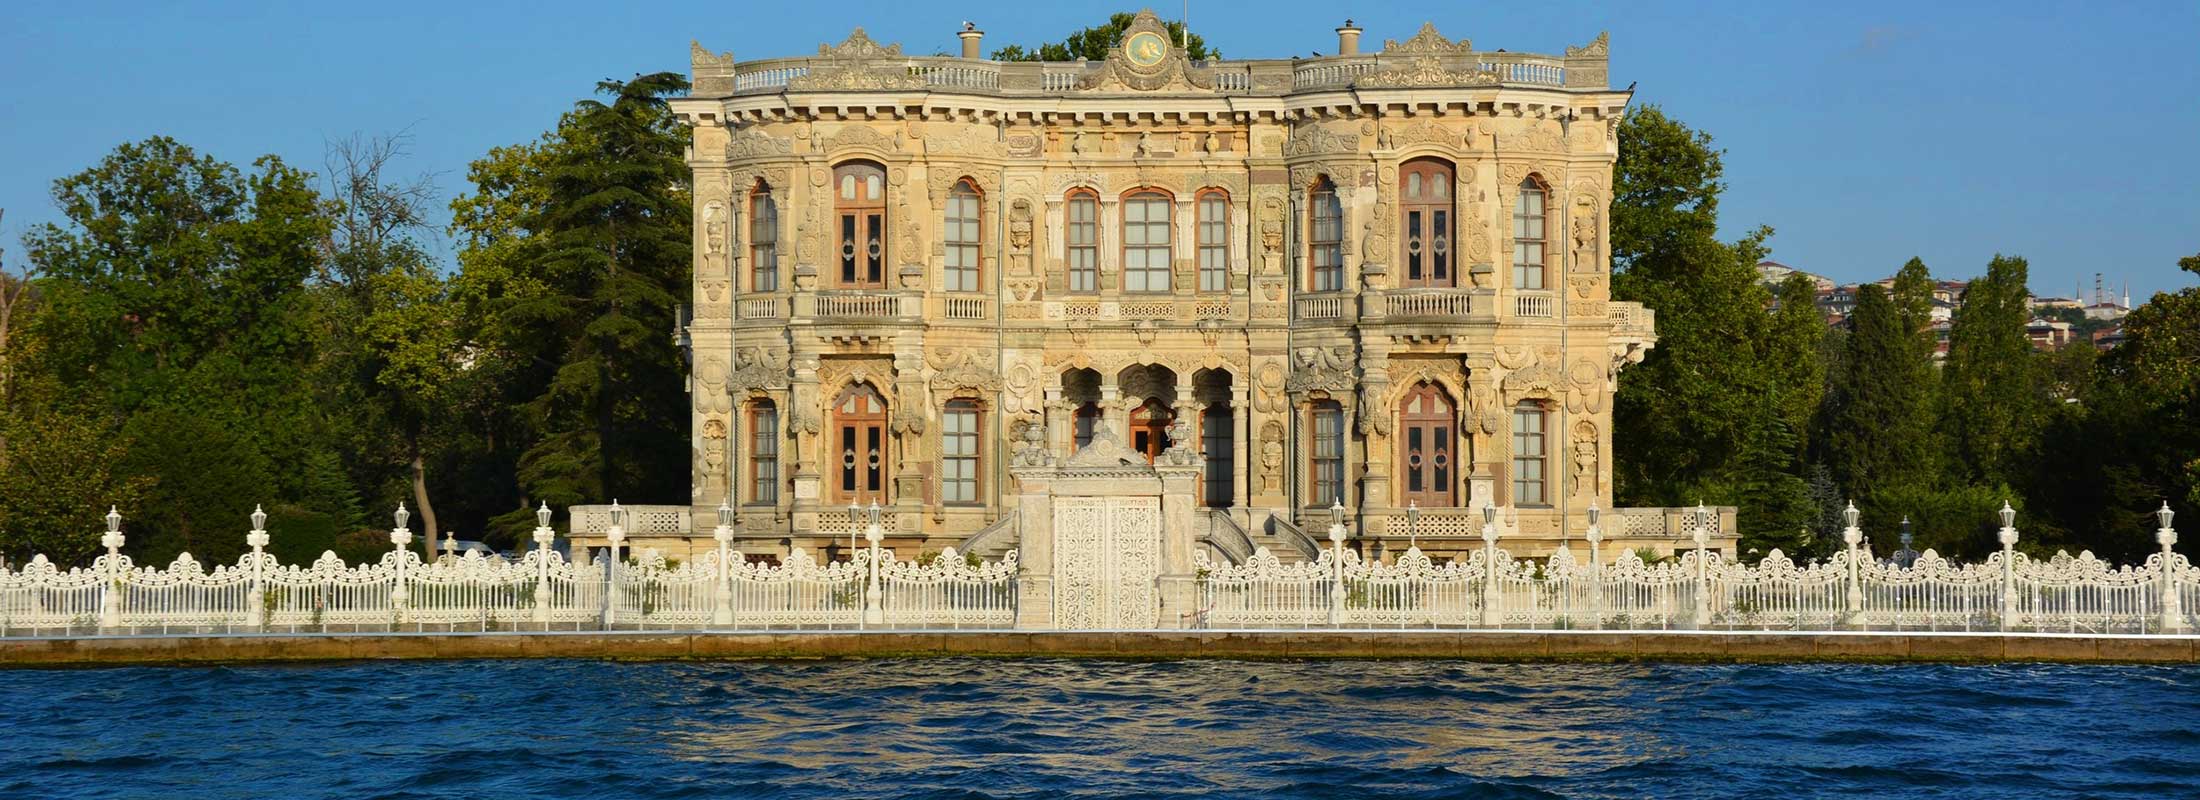 kucuksu-palace-bosphorus-cruise-istanbul-daily-city-tours